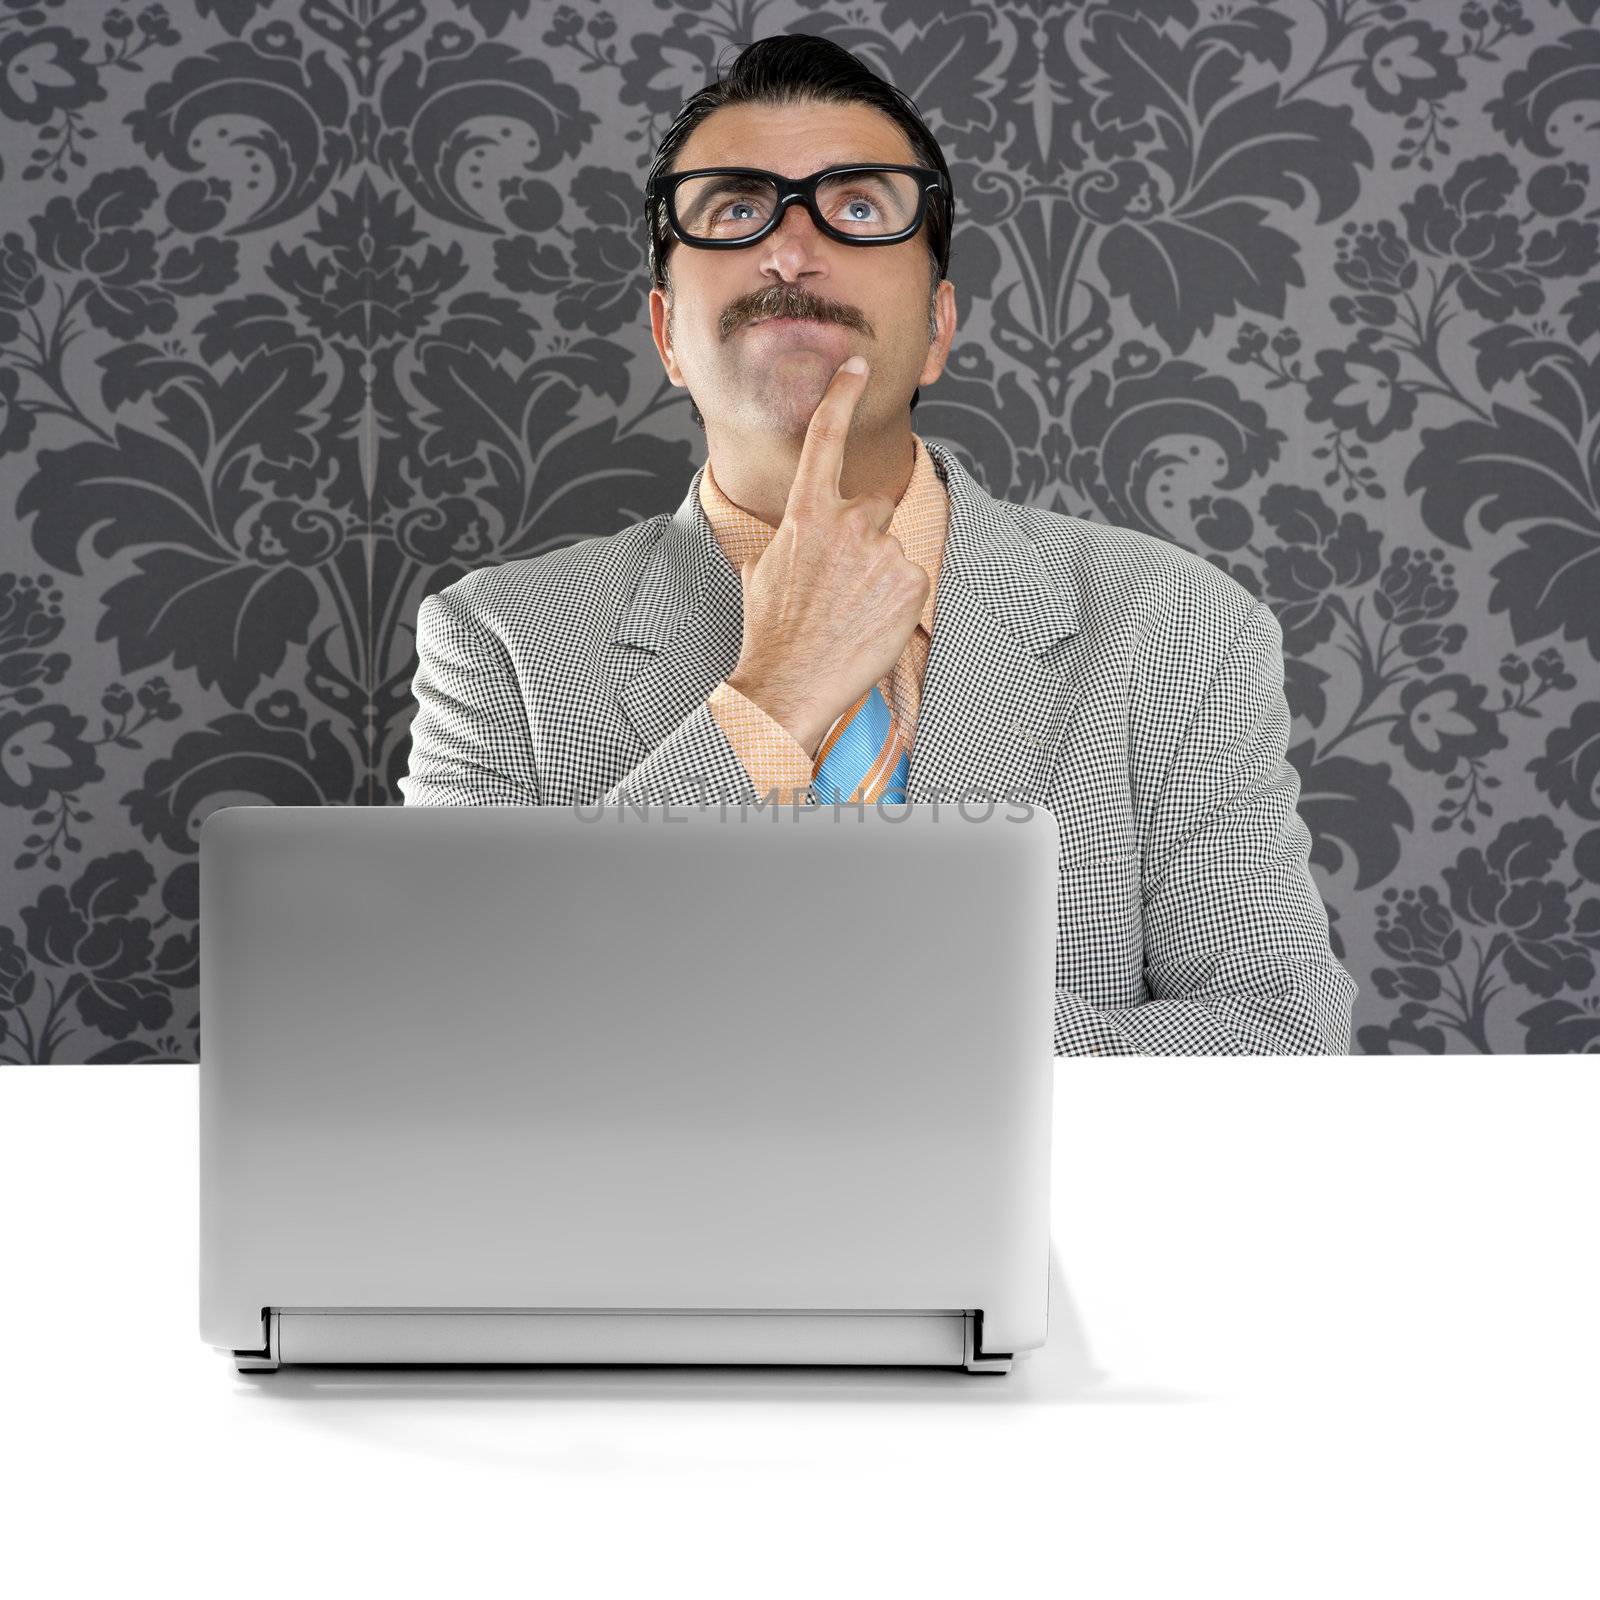 genius nerd silly glasses computer thinking gesture problem solution wallpaper background